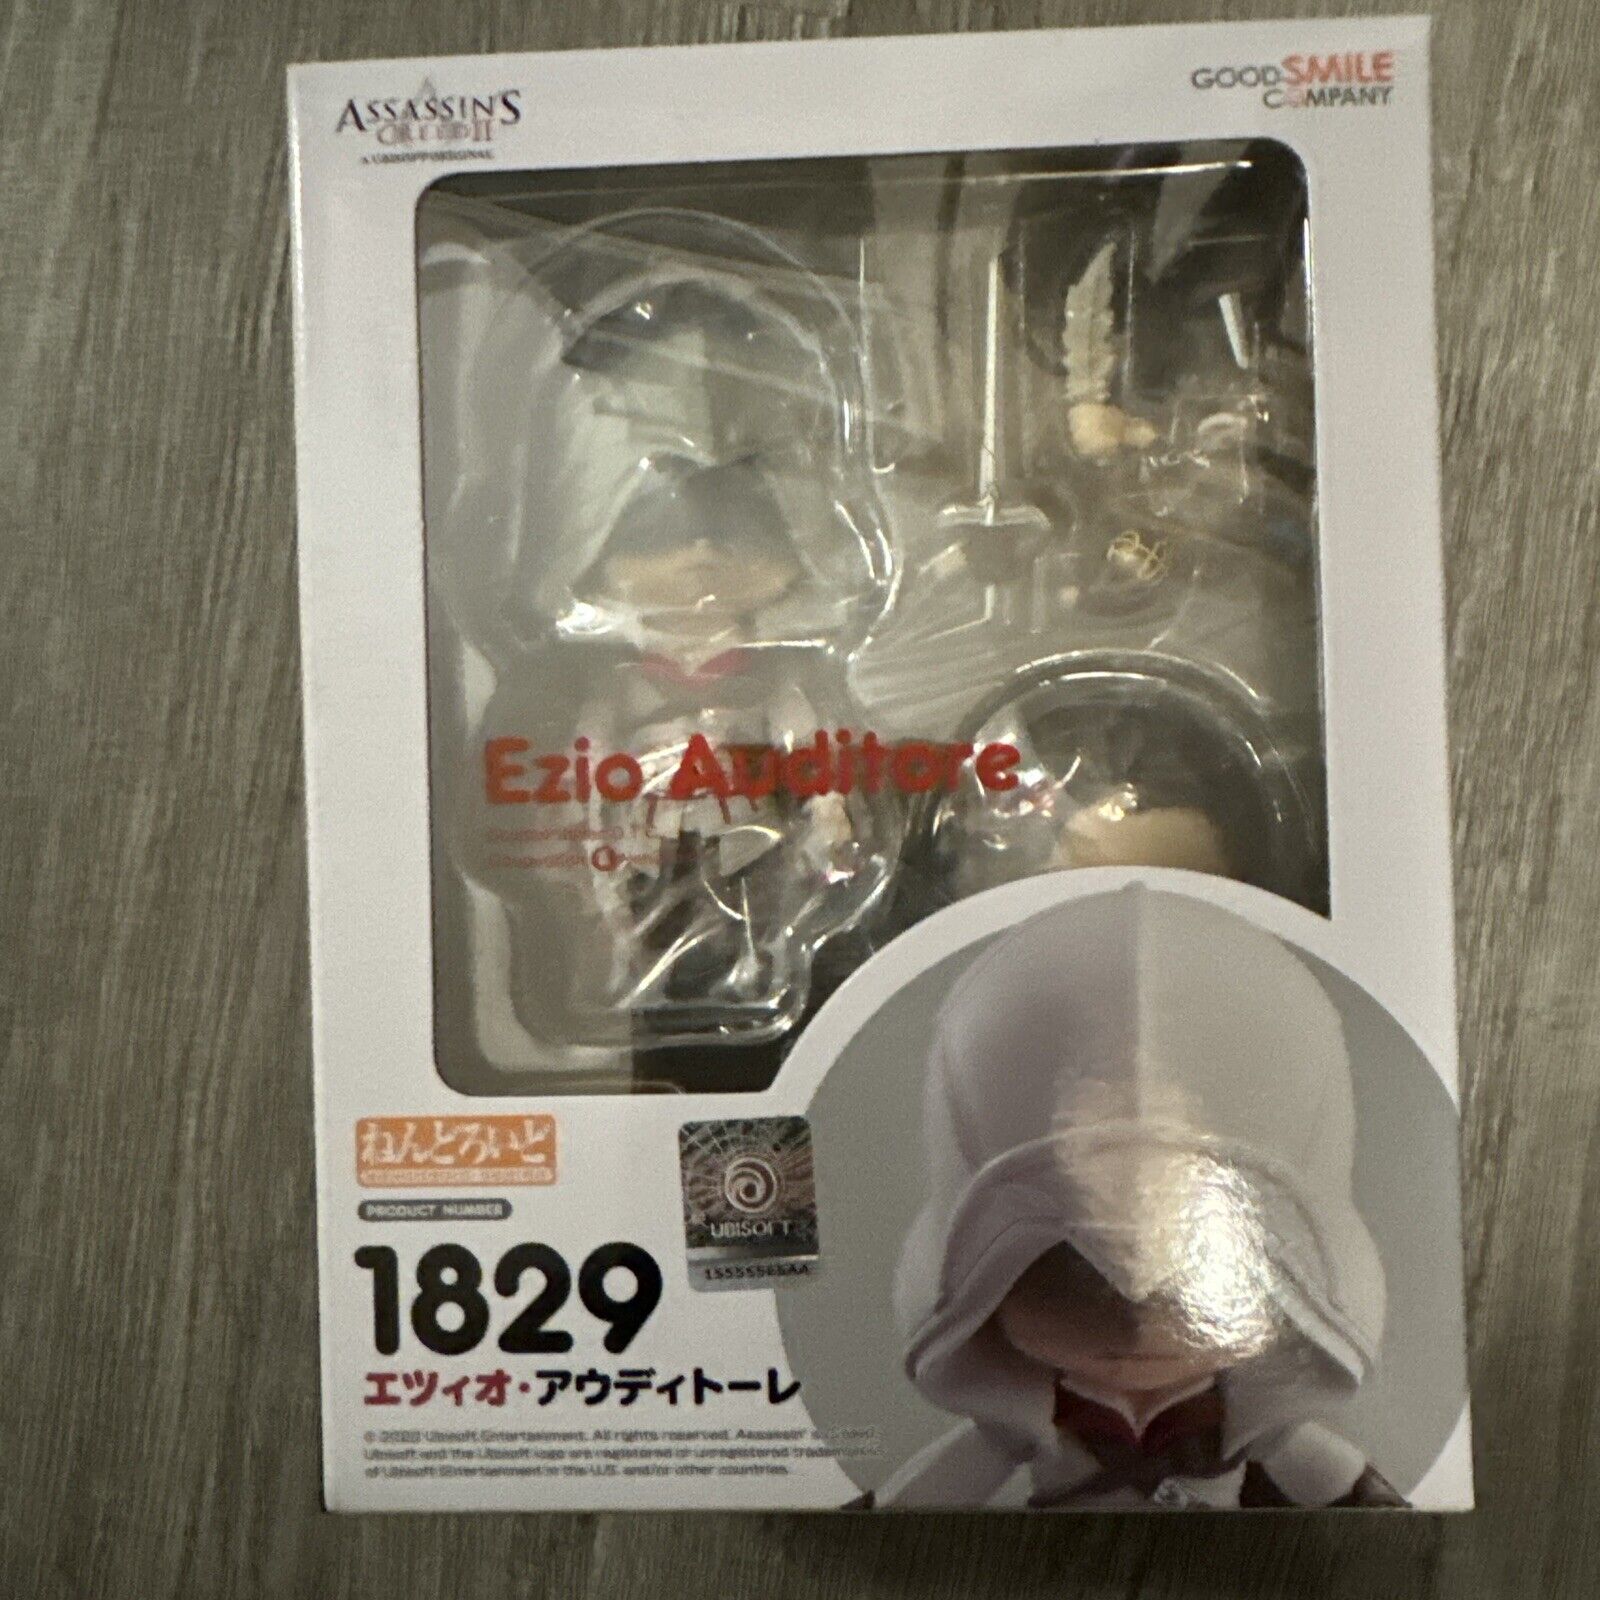 US seller *NEW good smileAssassin's Creed R: Ezio Auditore Nendoroid PVC Figure